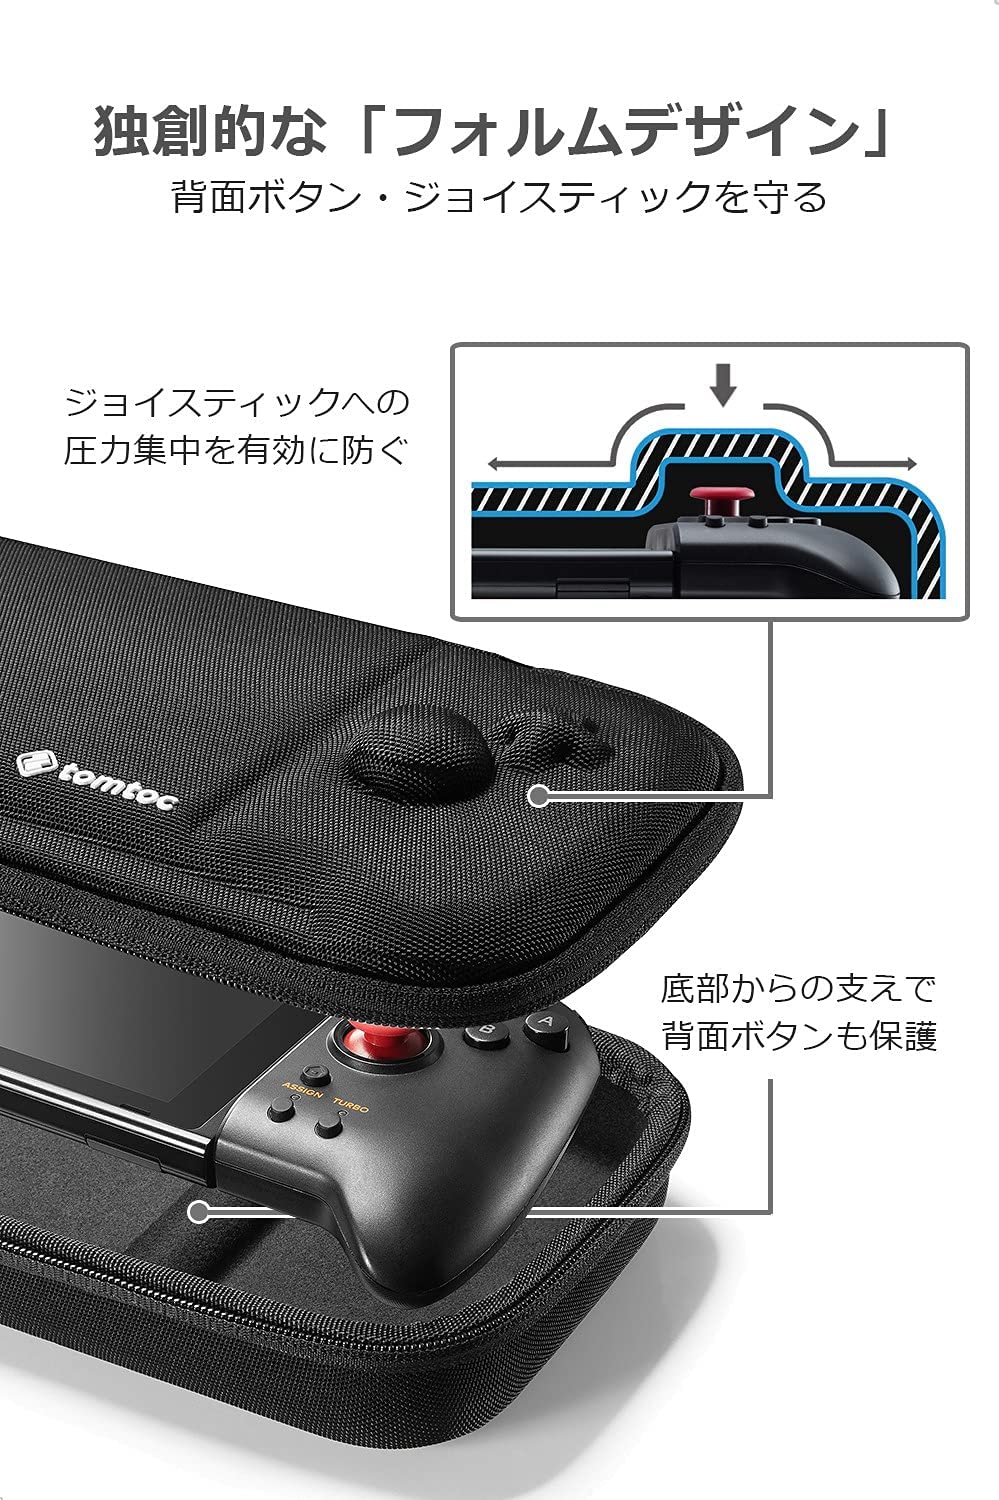 FancyCase-A05 ホリグリップコントローラー専用 Nintendo Switch 収納ケース